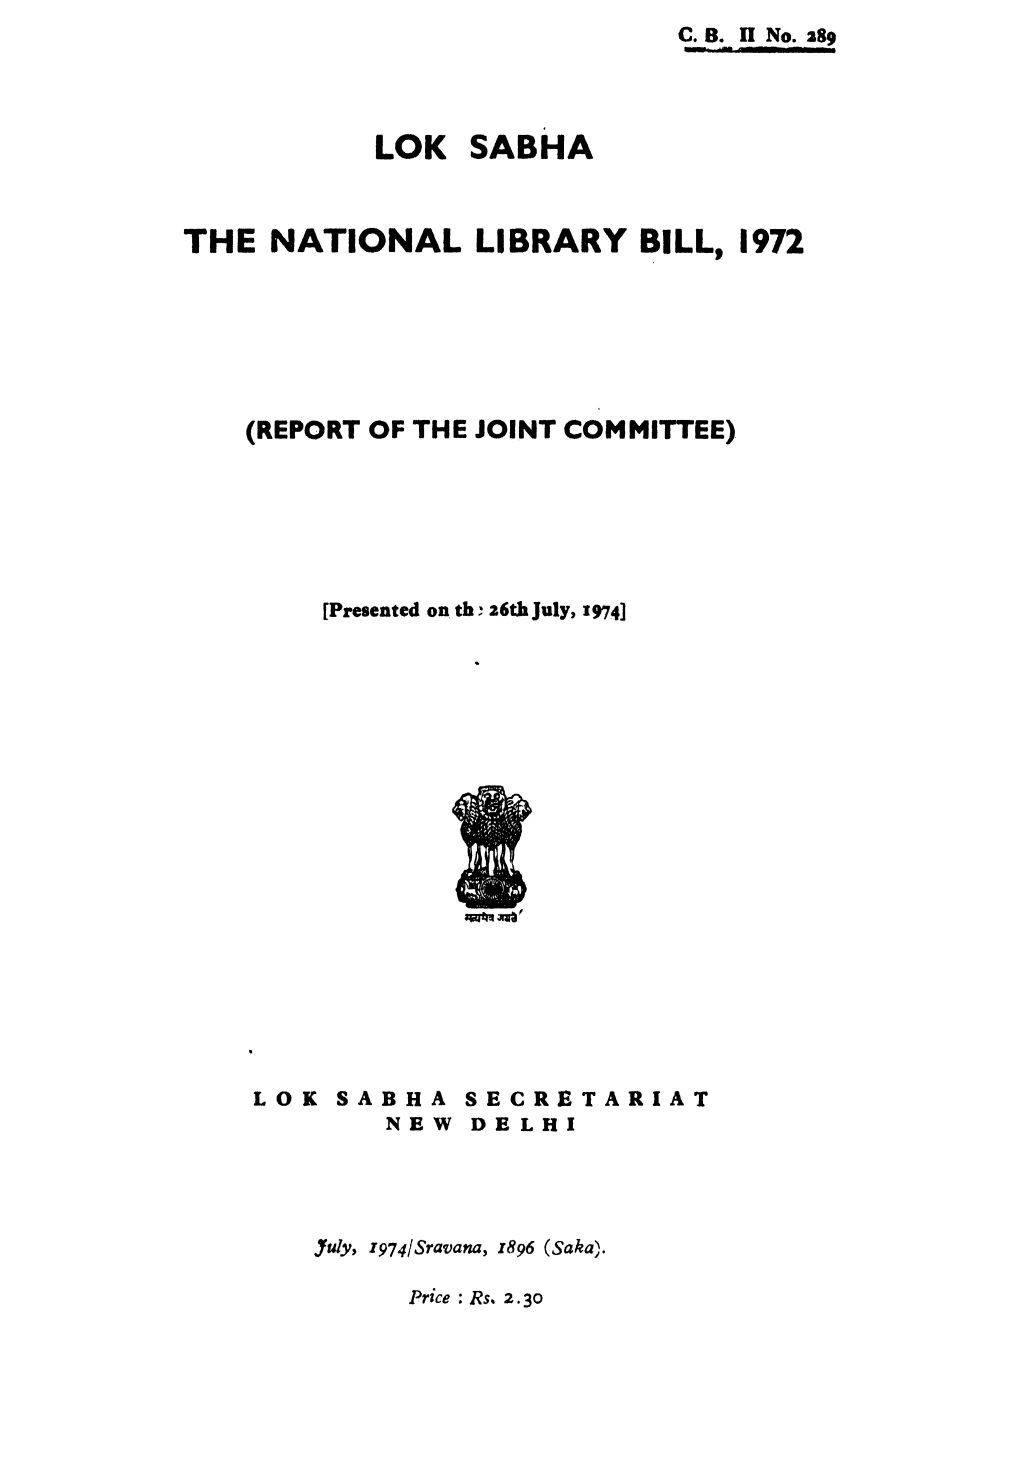 Lok Sabha the National Library Bill, 1972